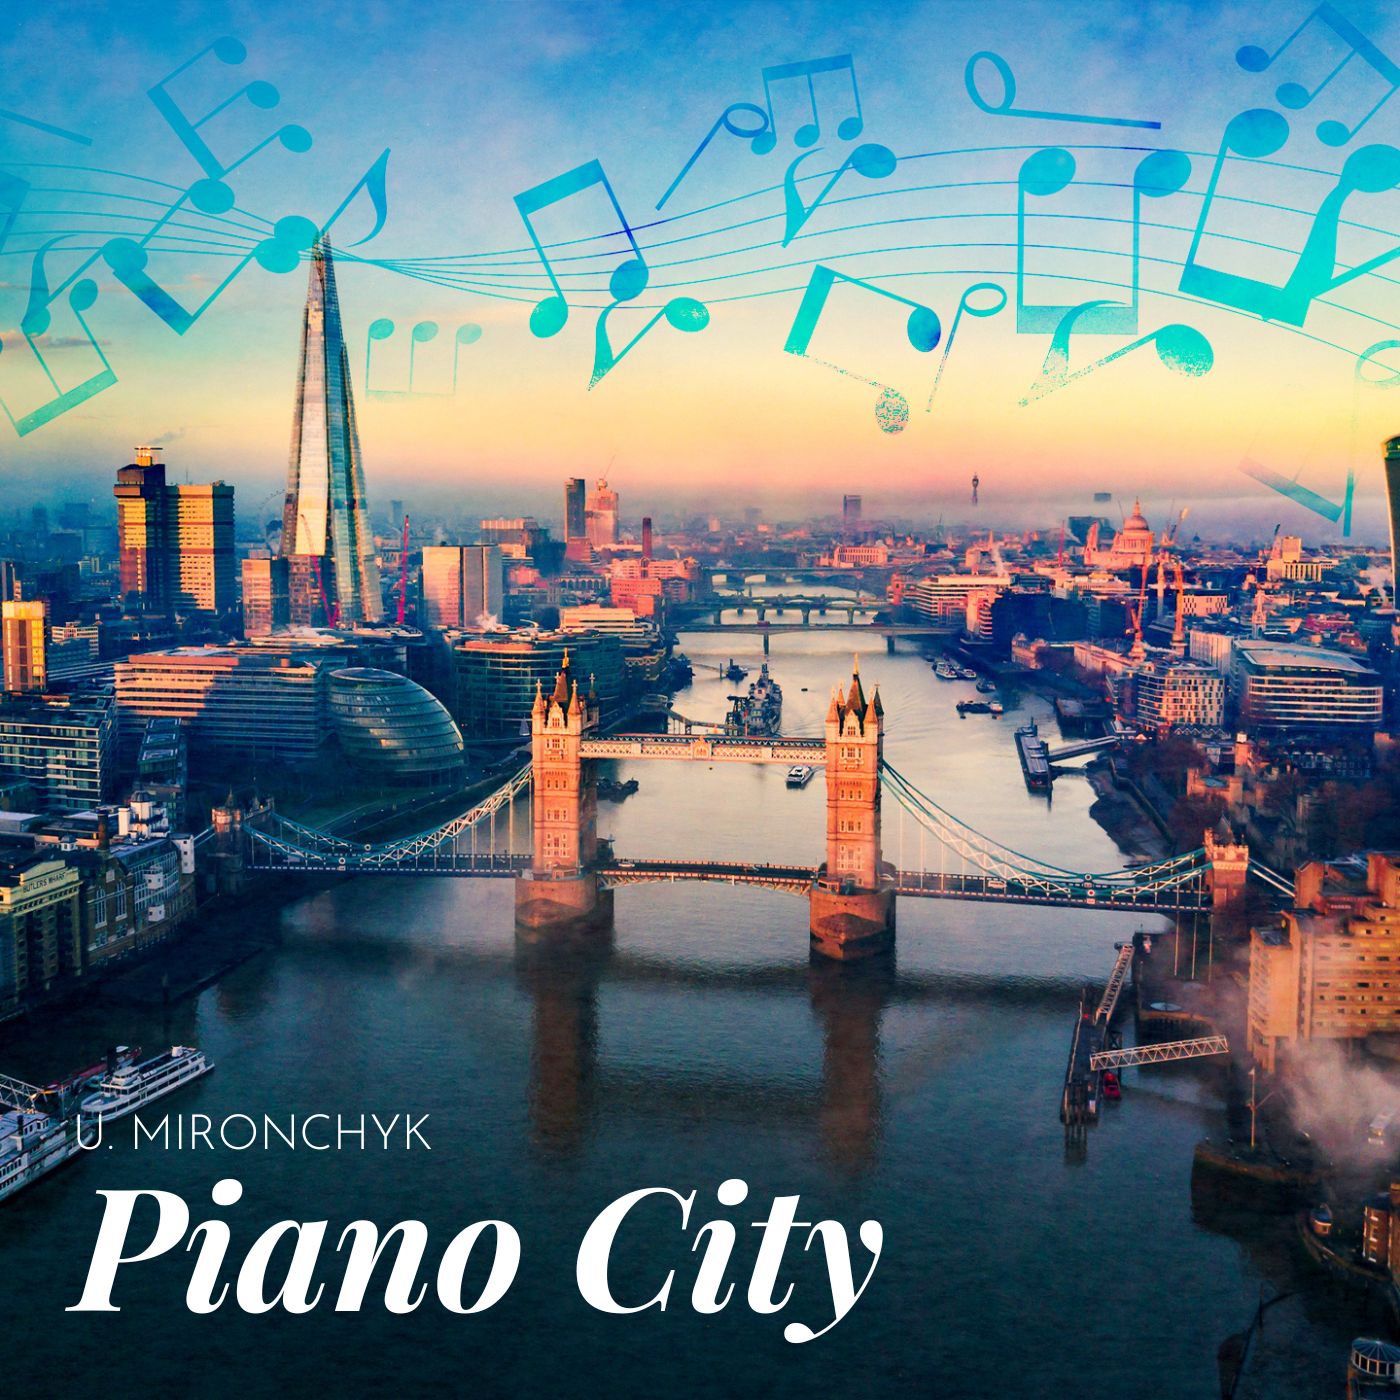 Piano City 